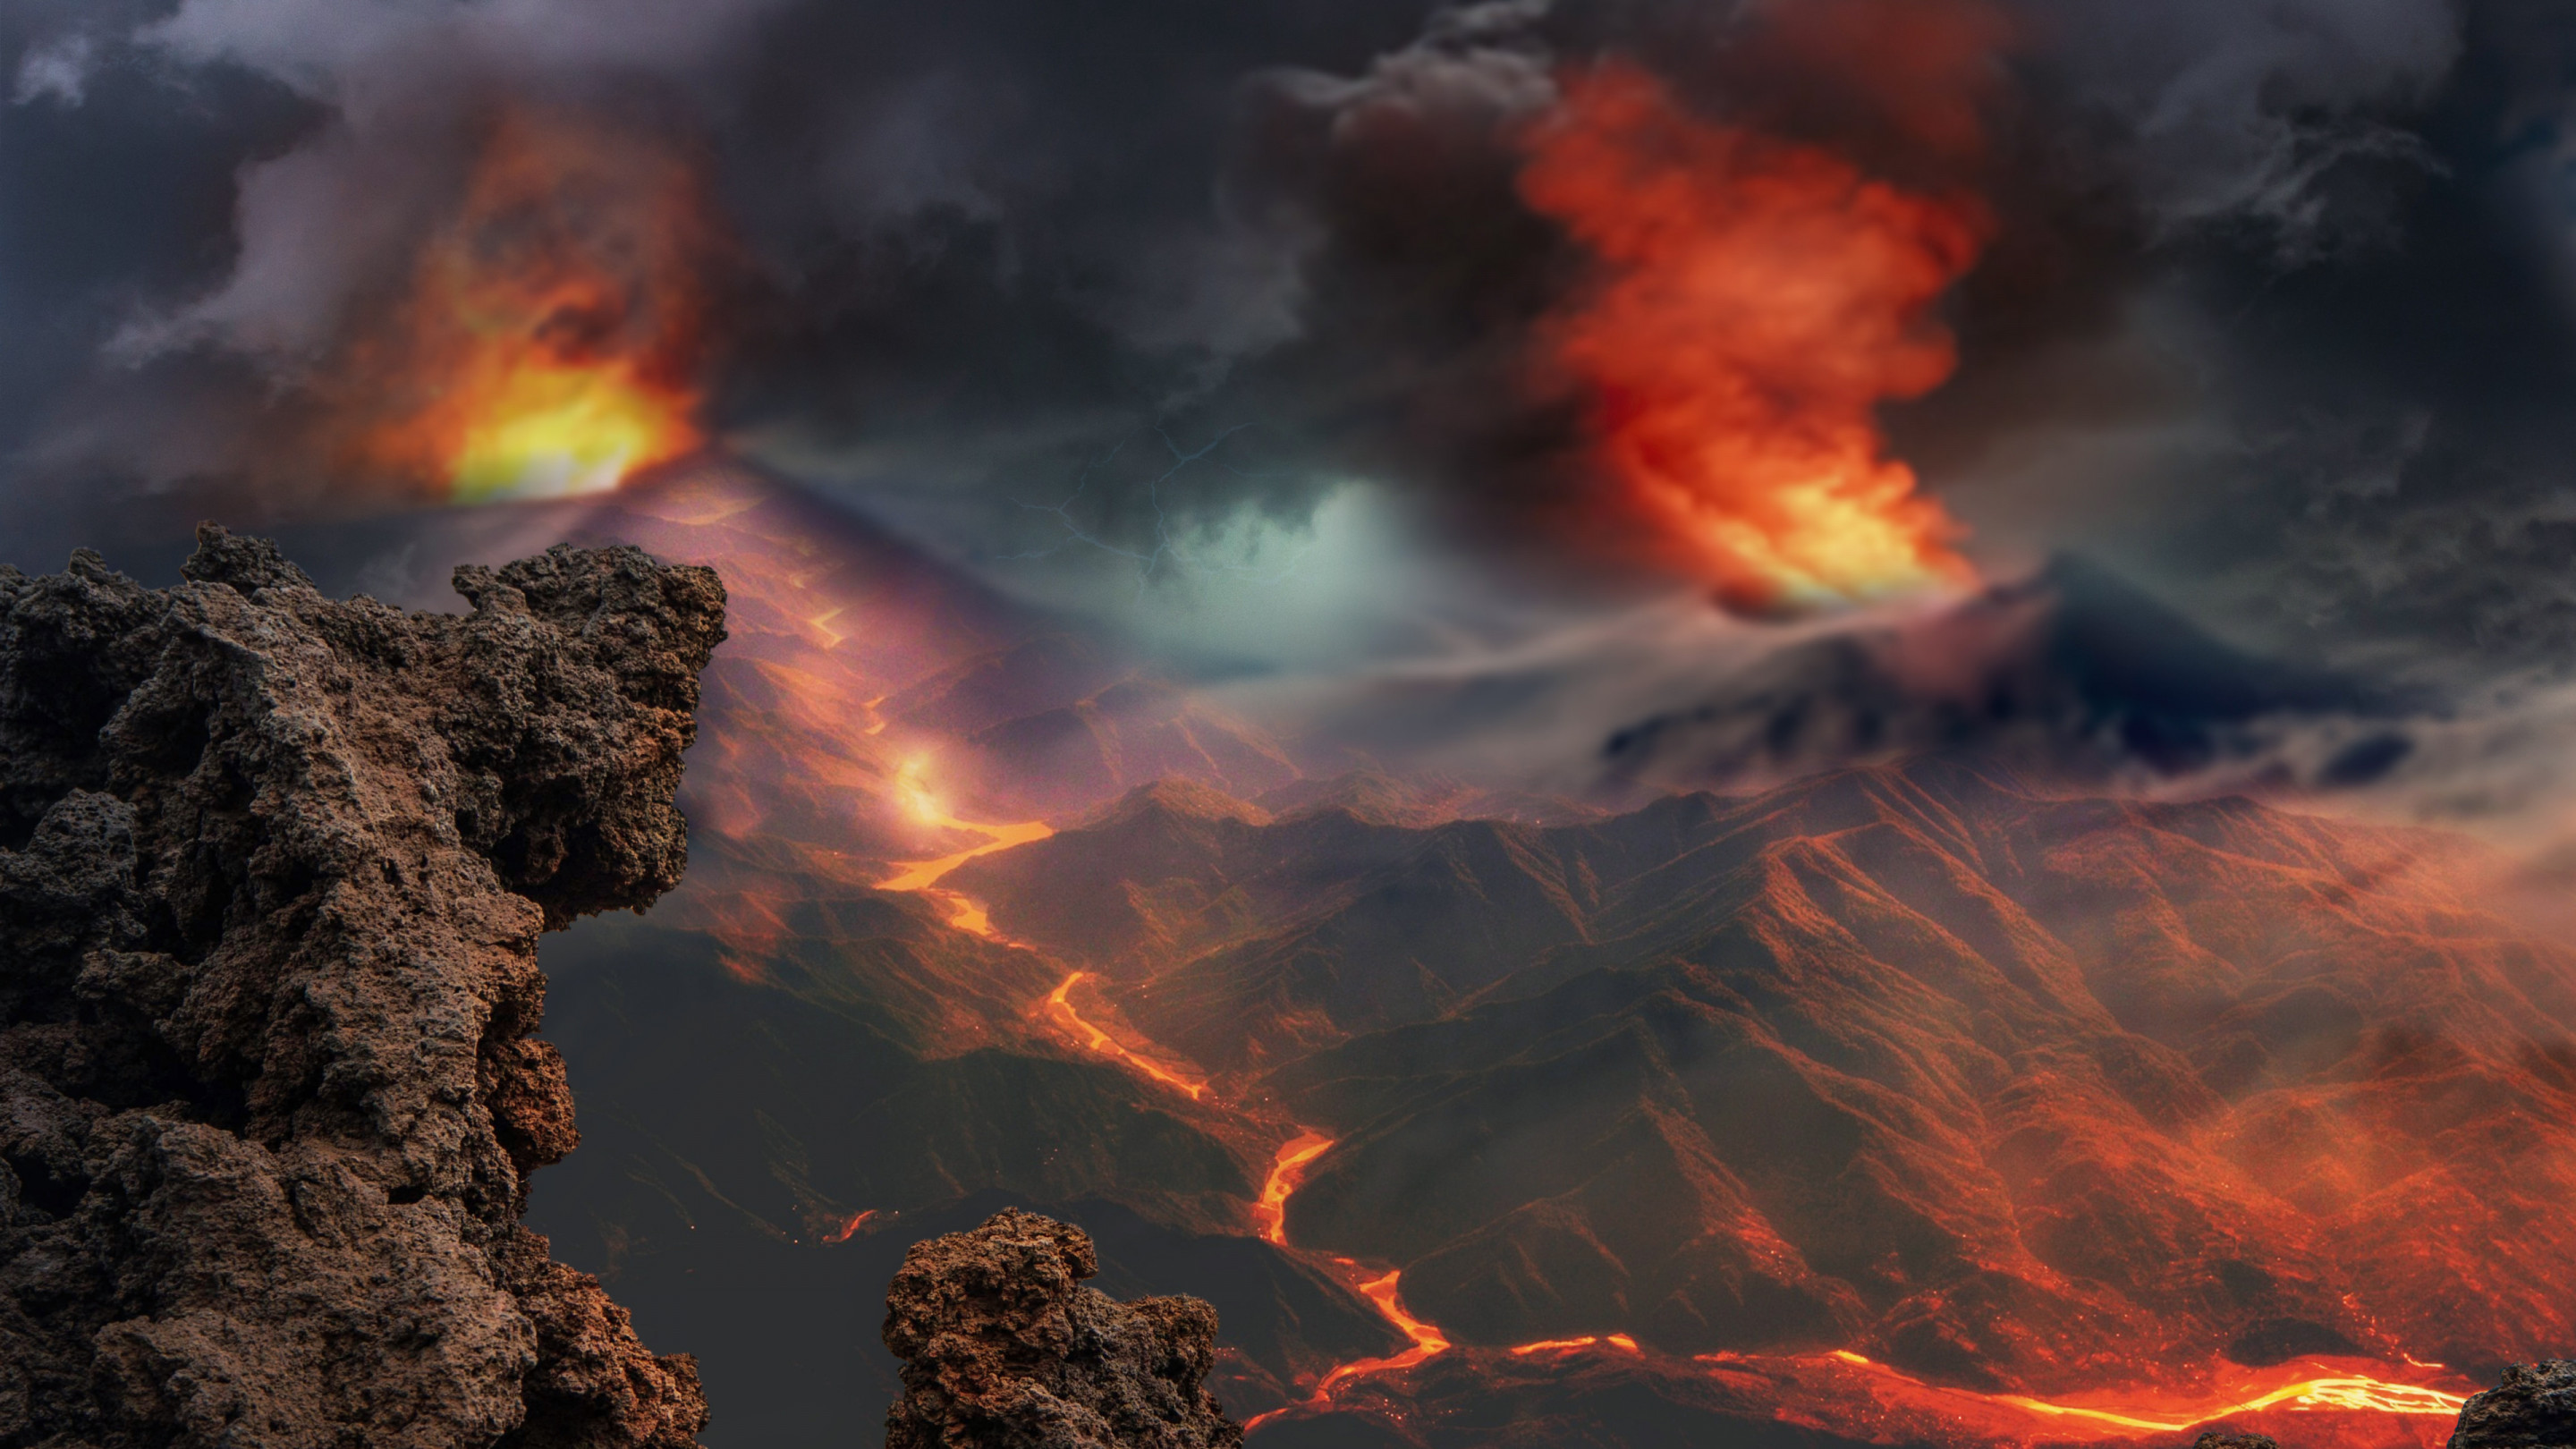 Download Wallpaper Volcanoes Eruption And Lava Flow x16